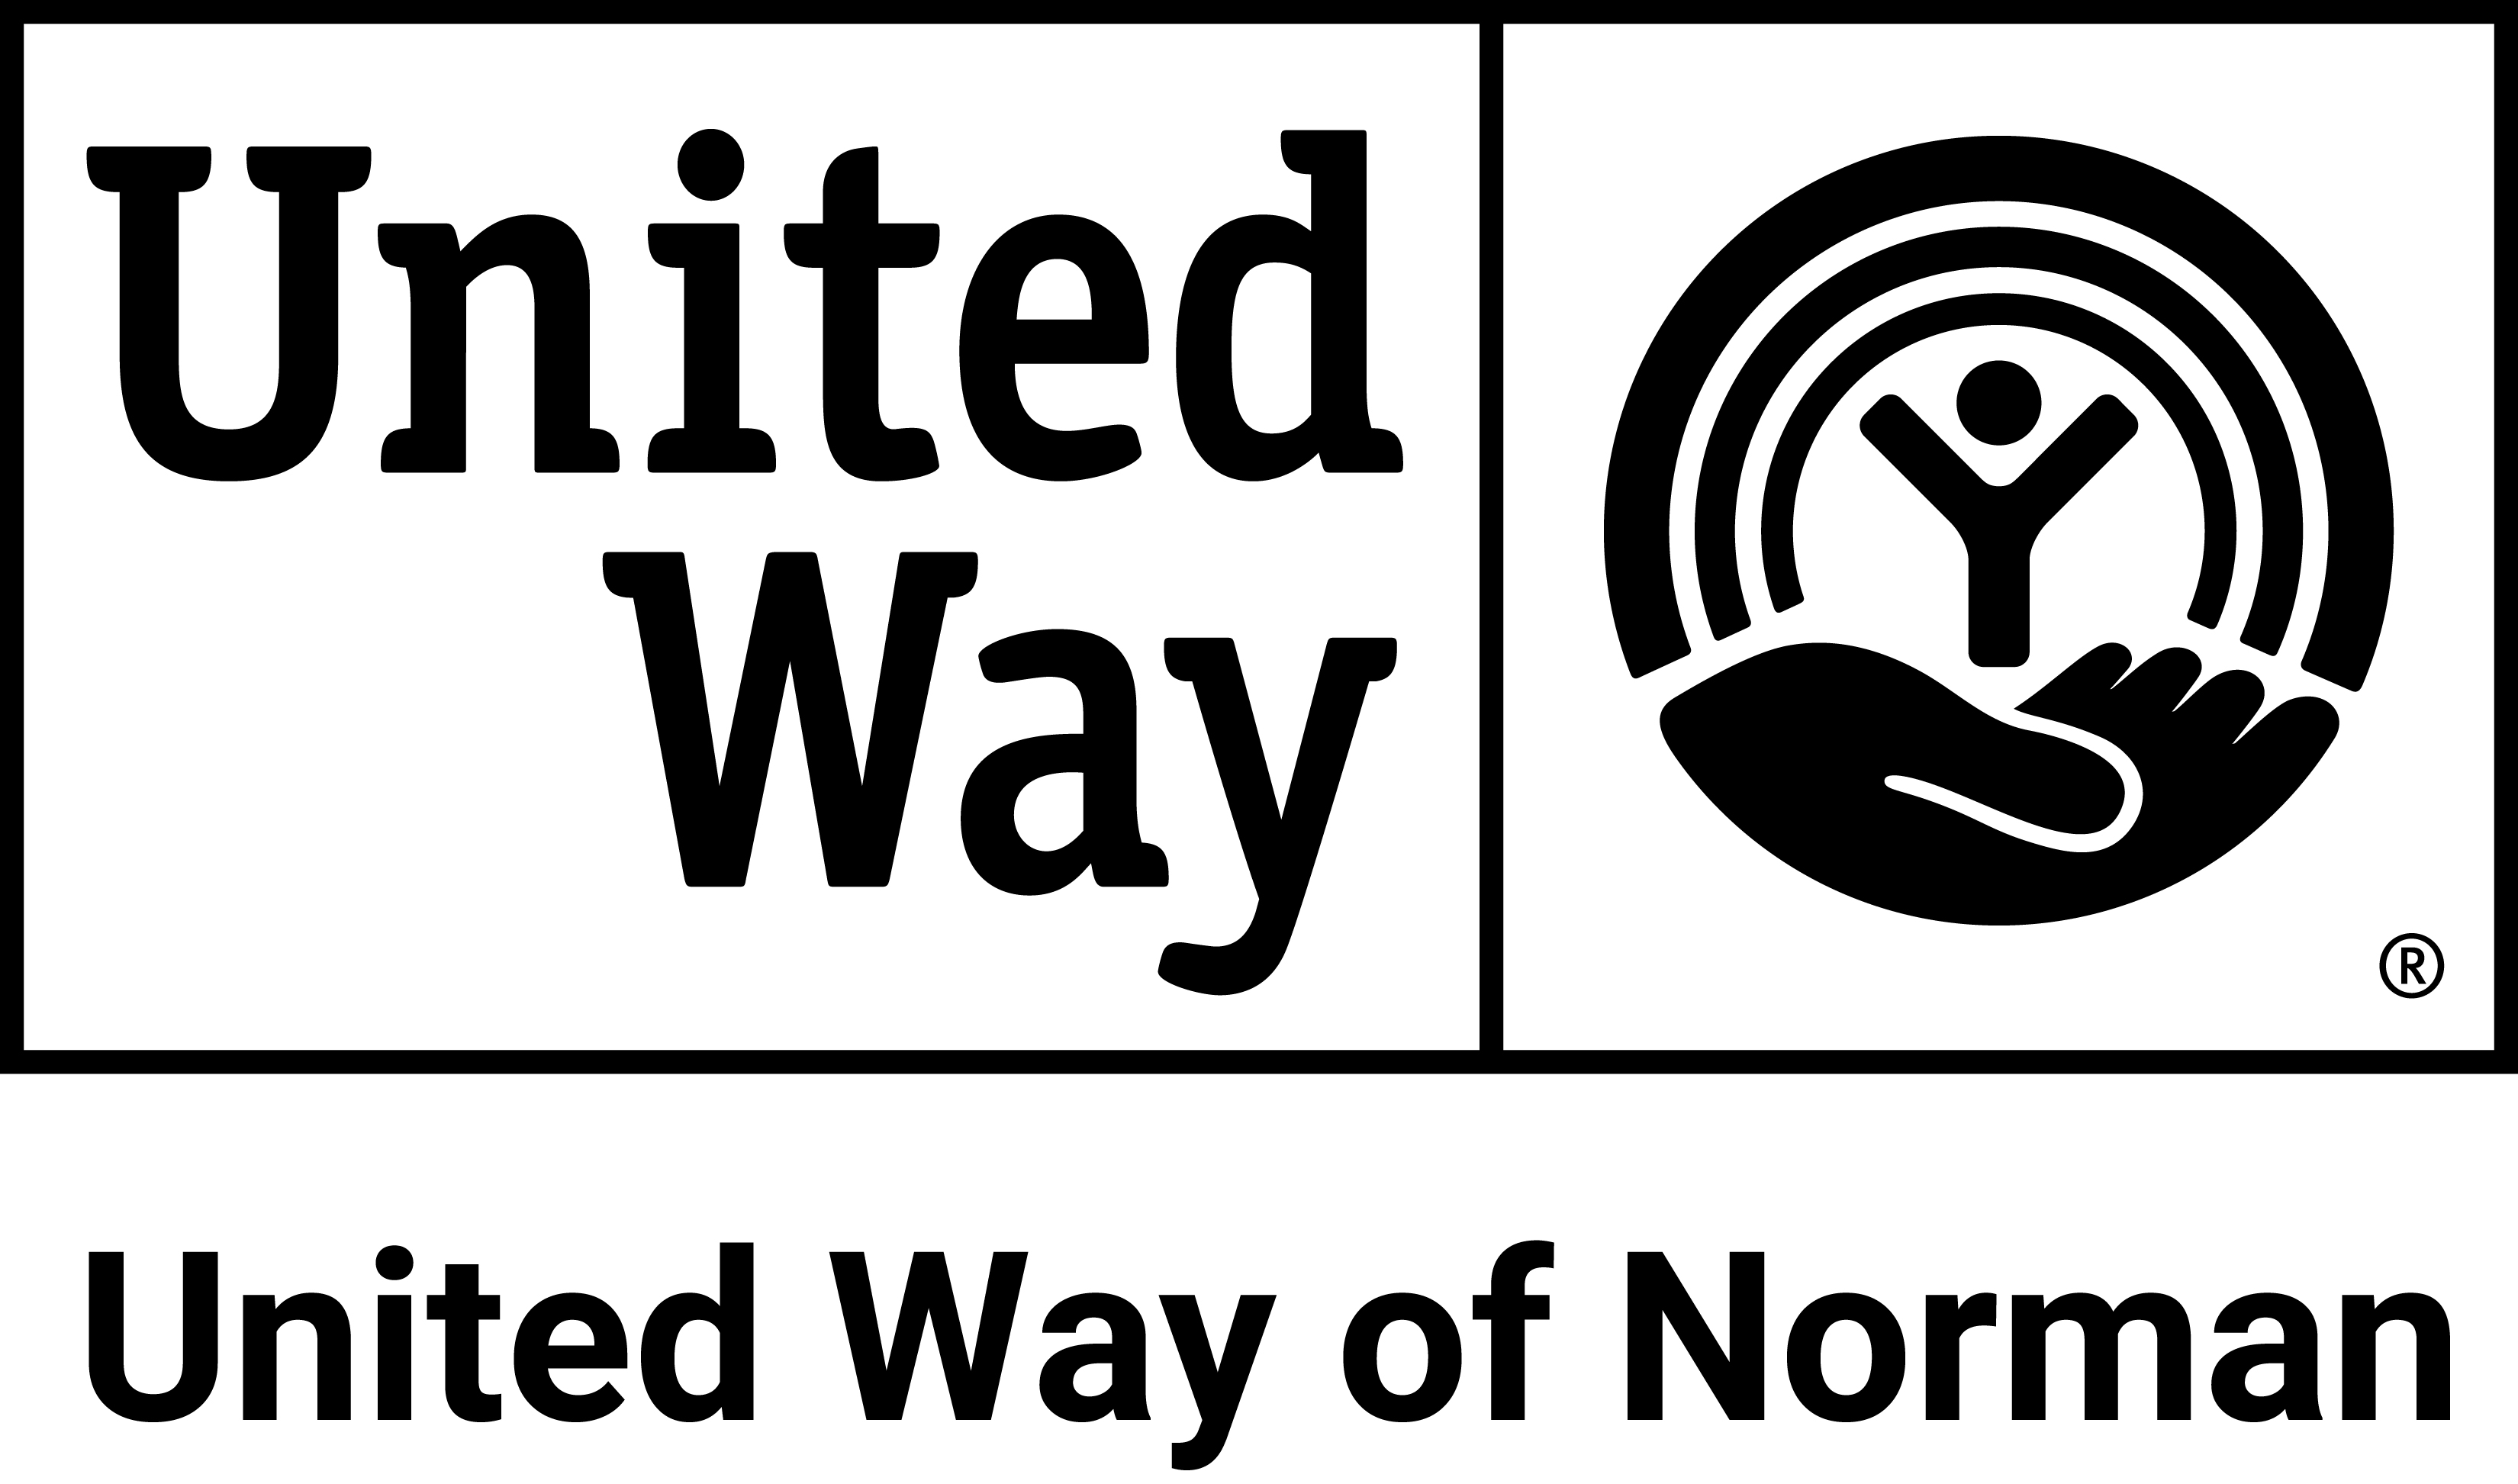 United Way of Norman logo black